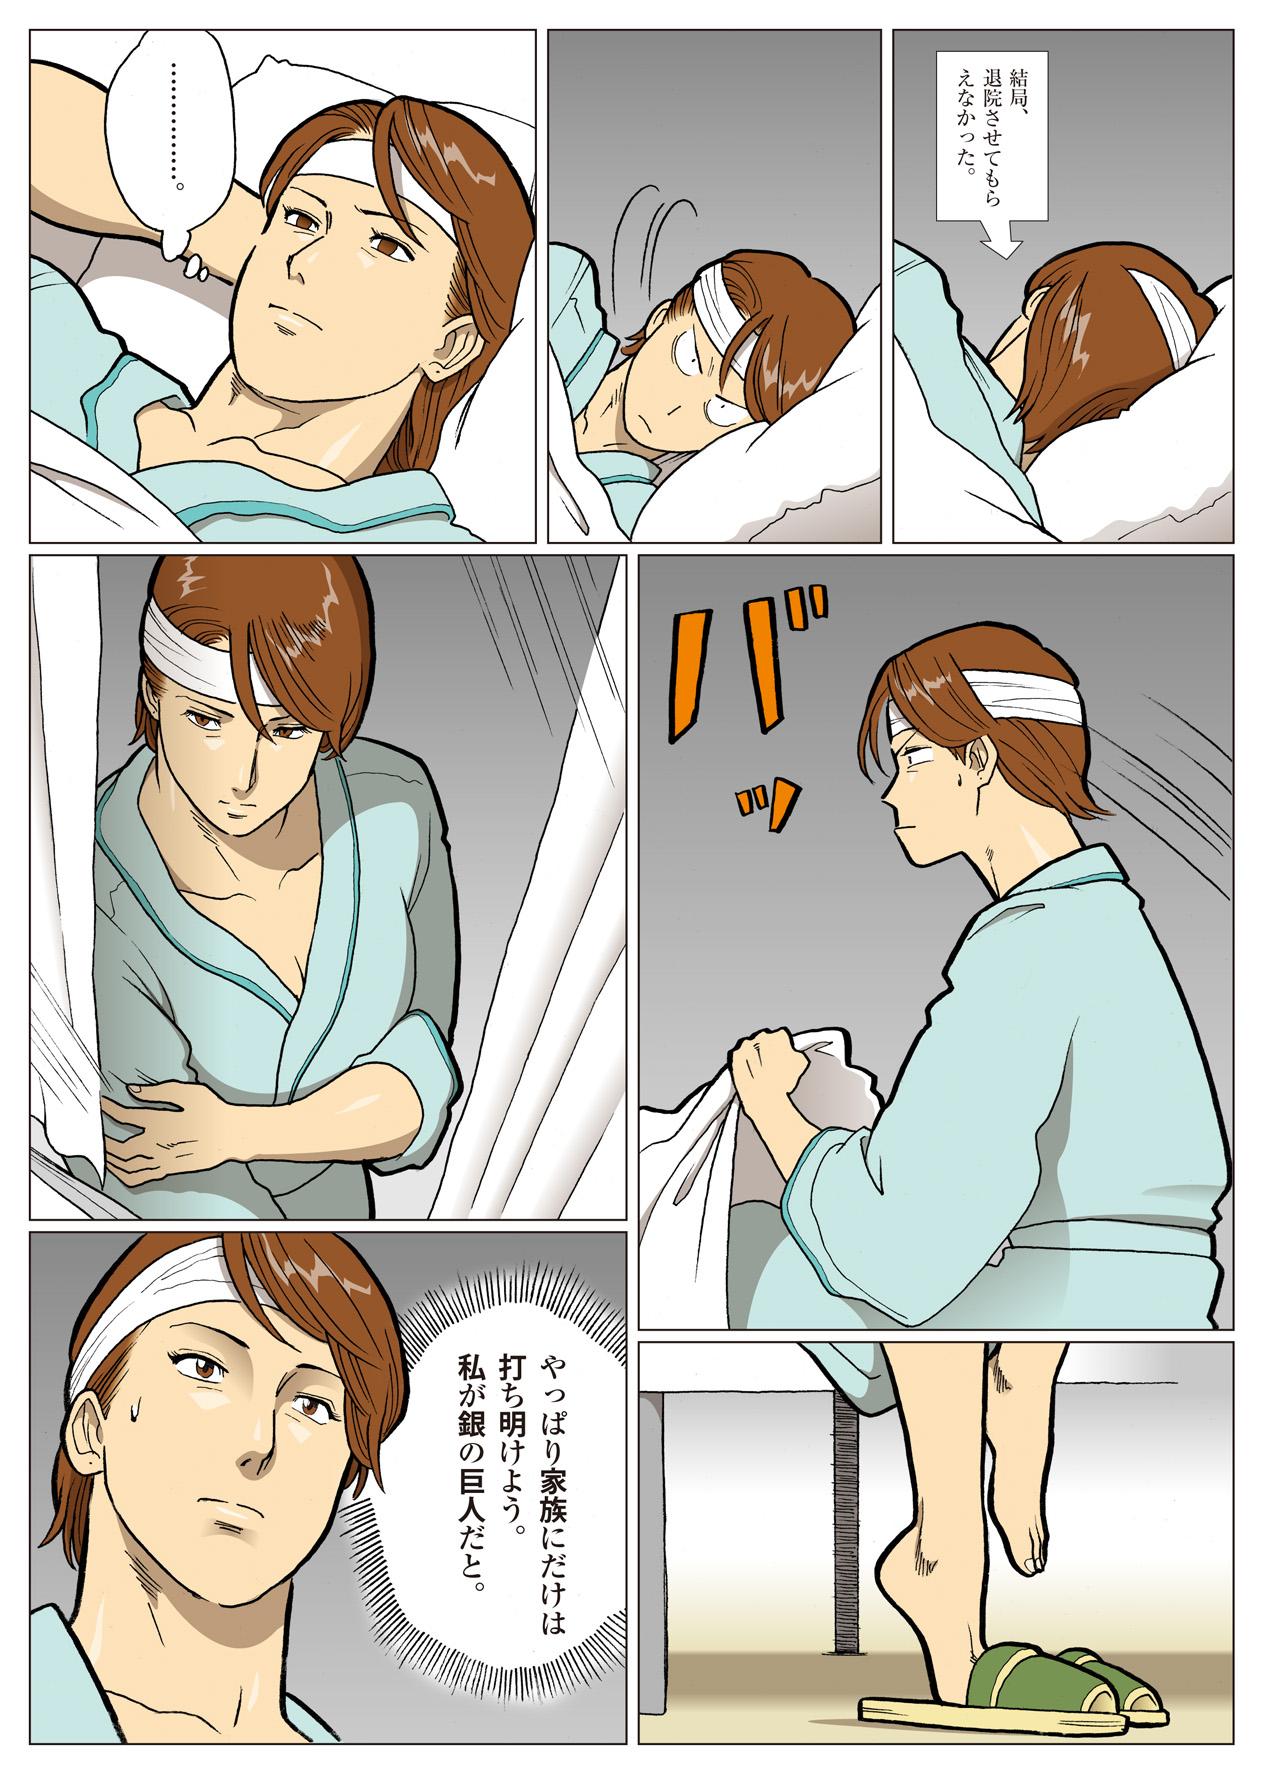 Lesbians Mousou Tokusatsu Series: Ultra Madam 6 - Ultraman Bj - Page 8